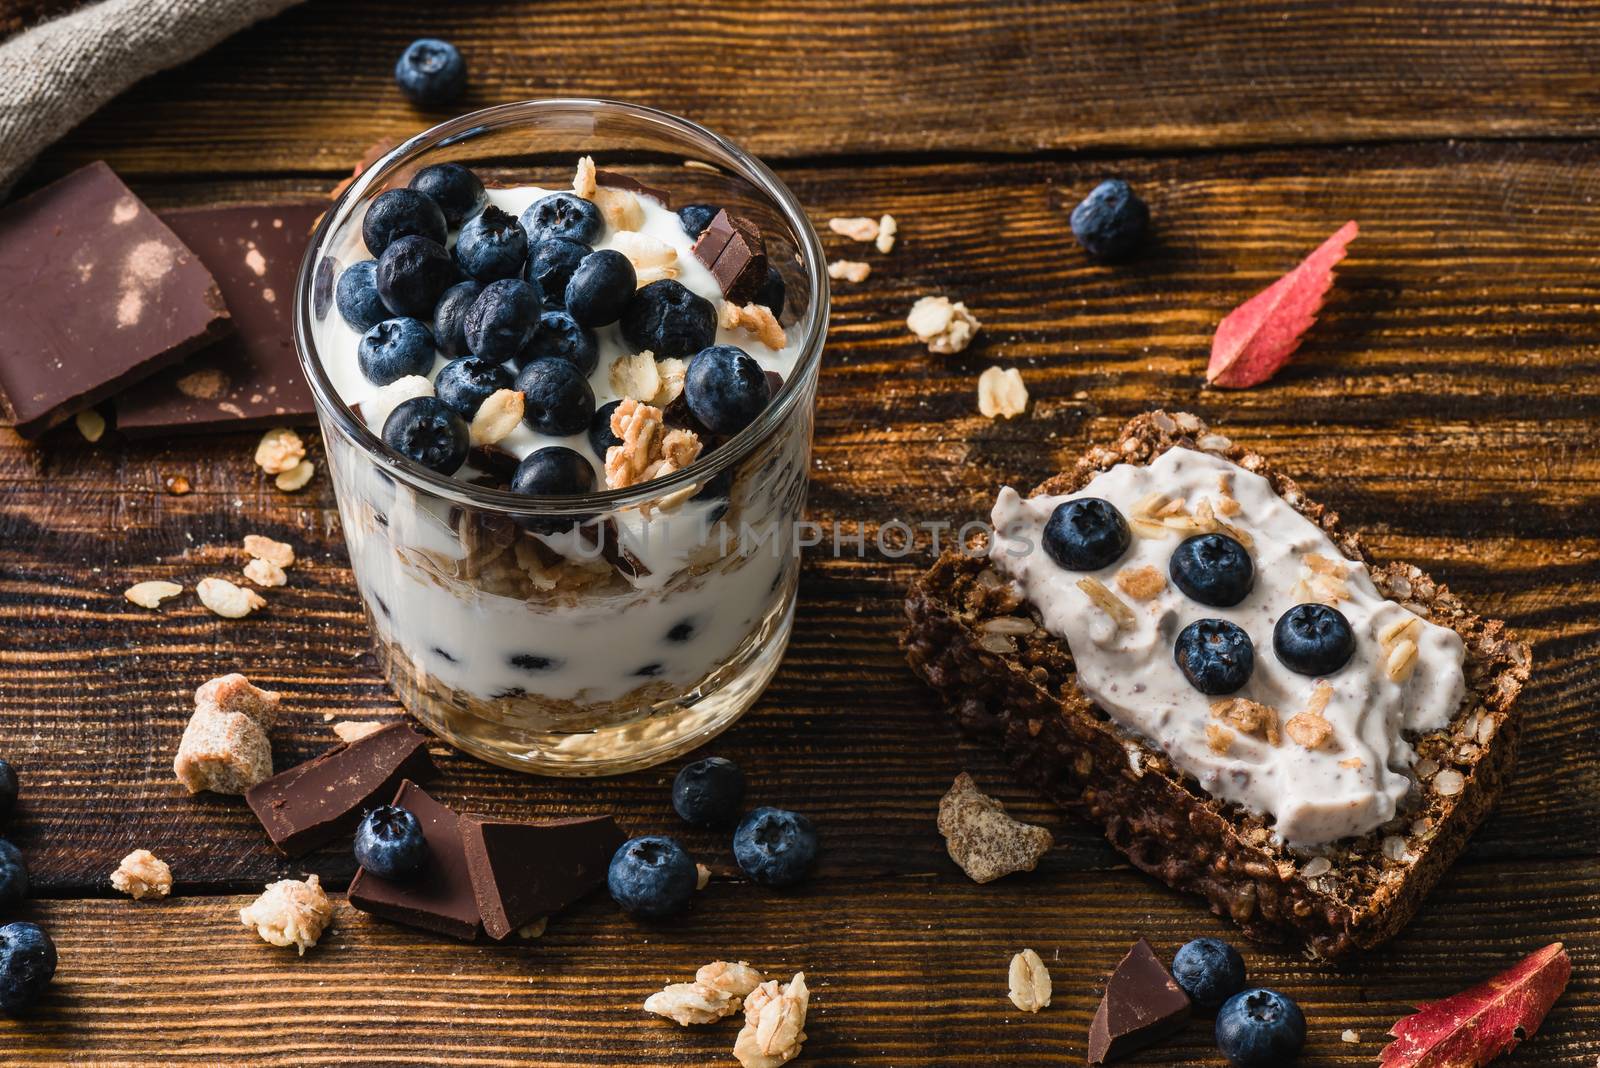 Healthy Breakfast with Blueberry by Seva_blsv